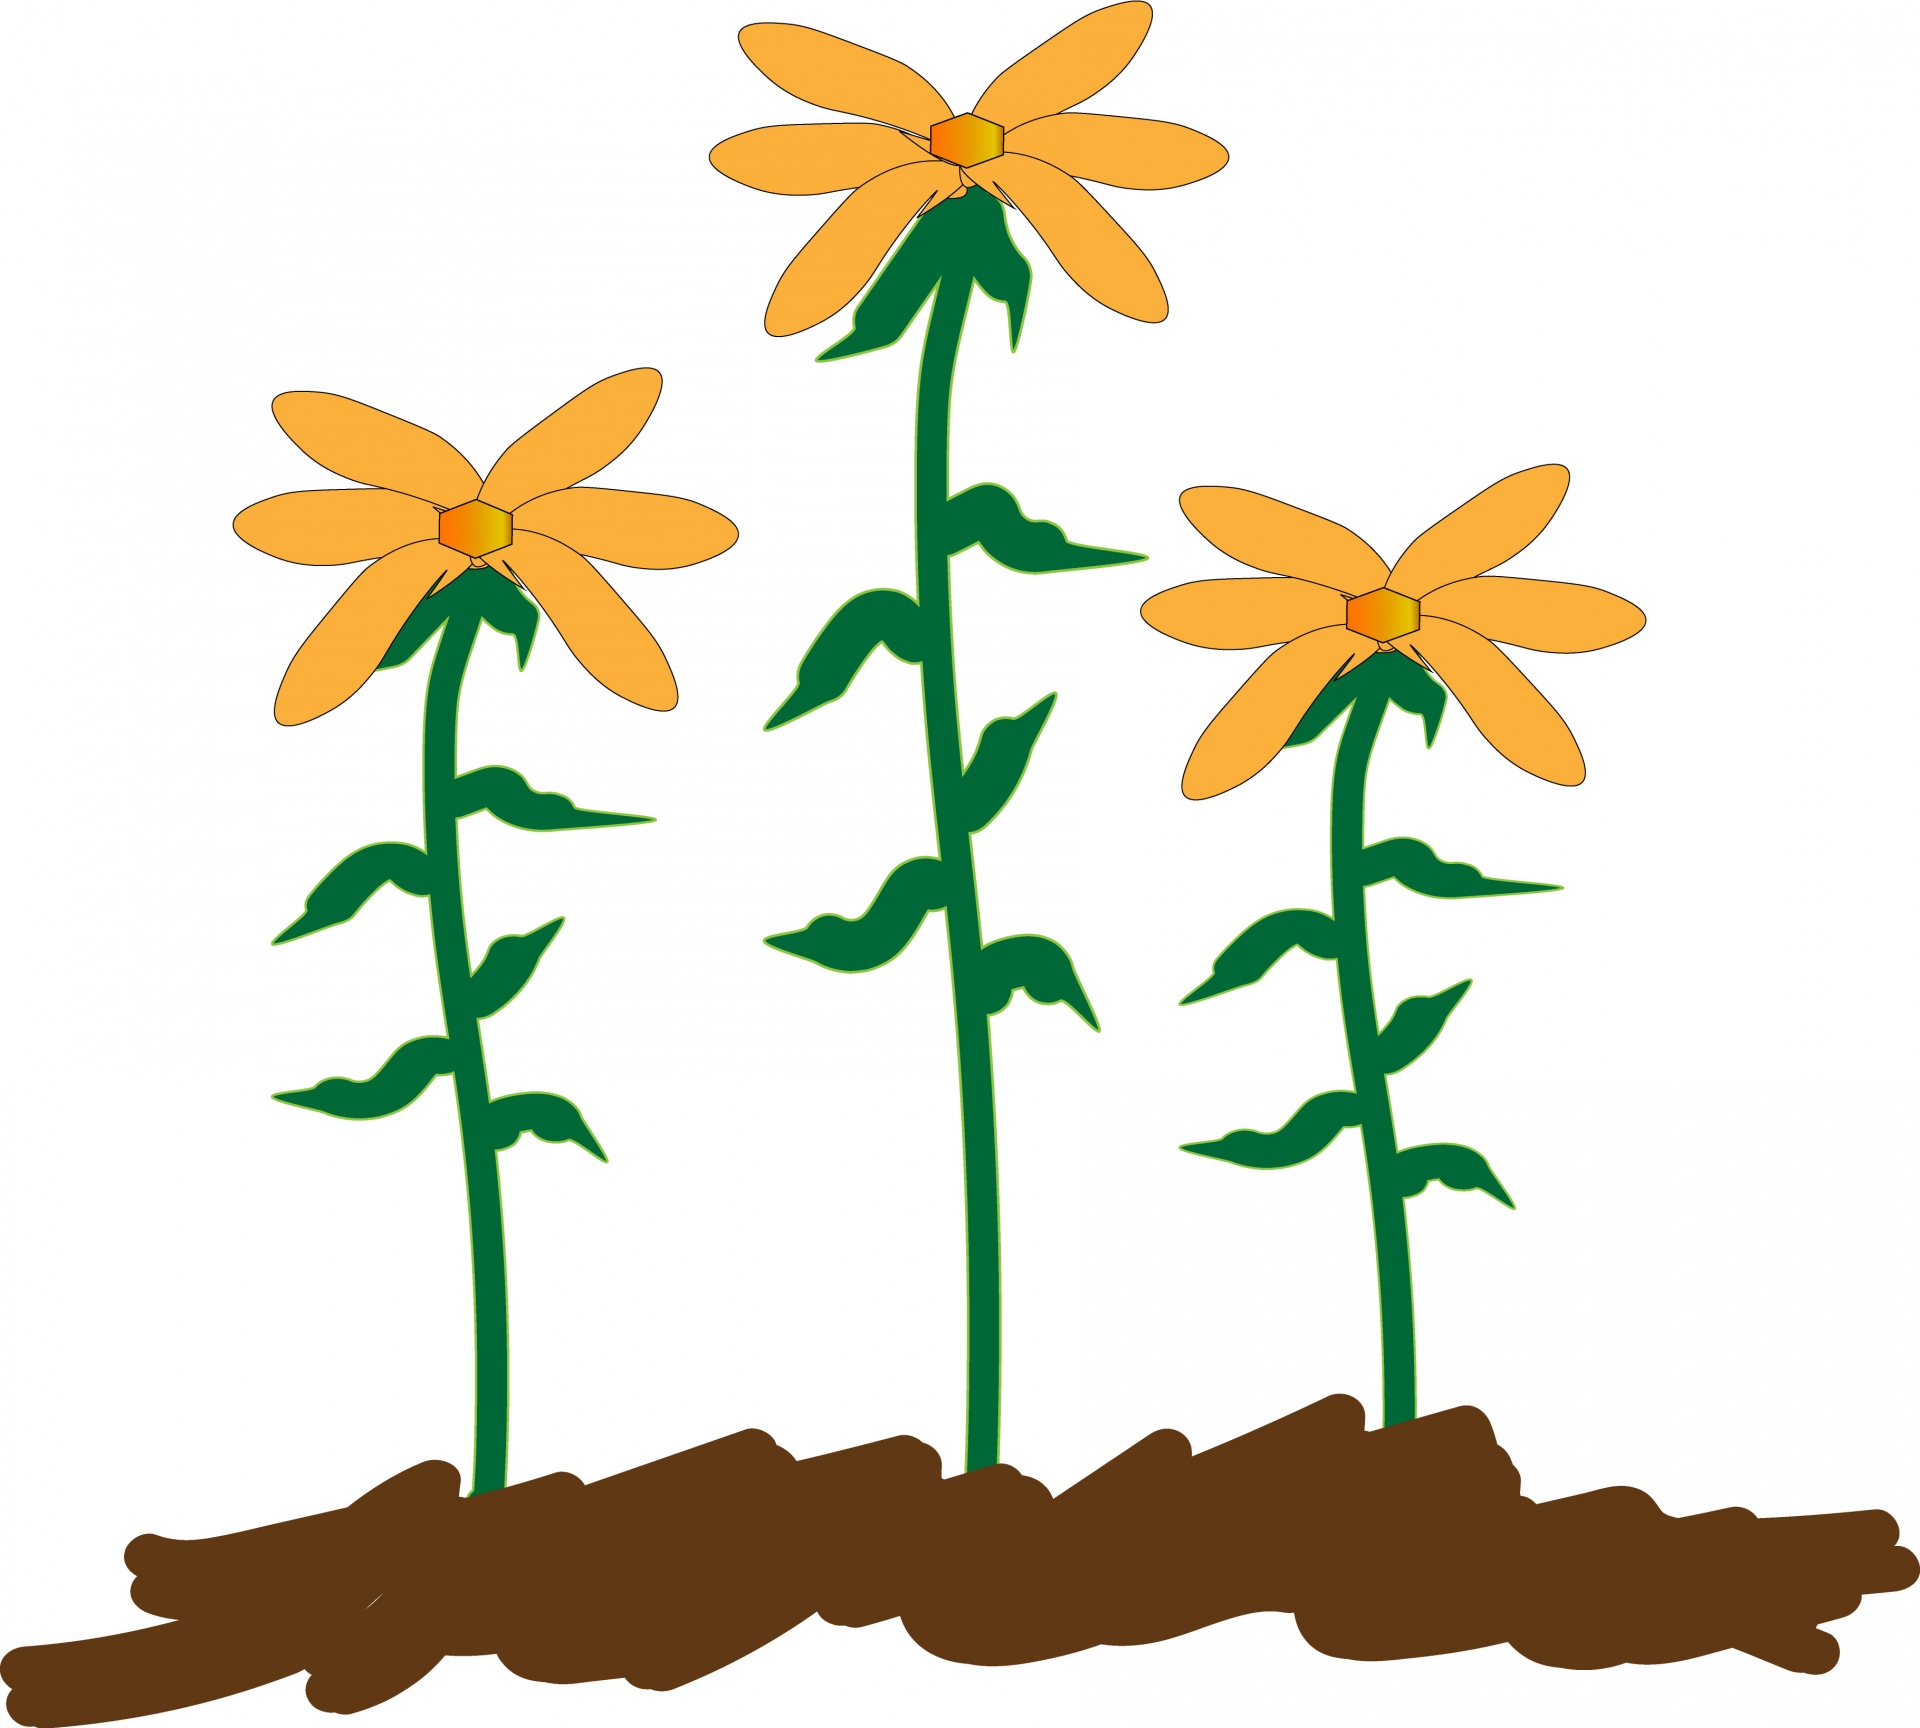 Three Sunflowers Illustration